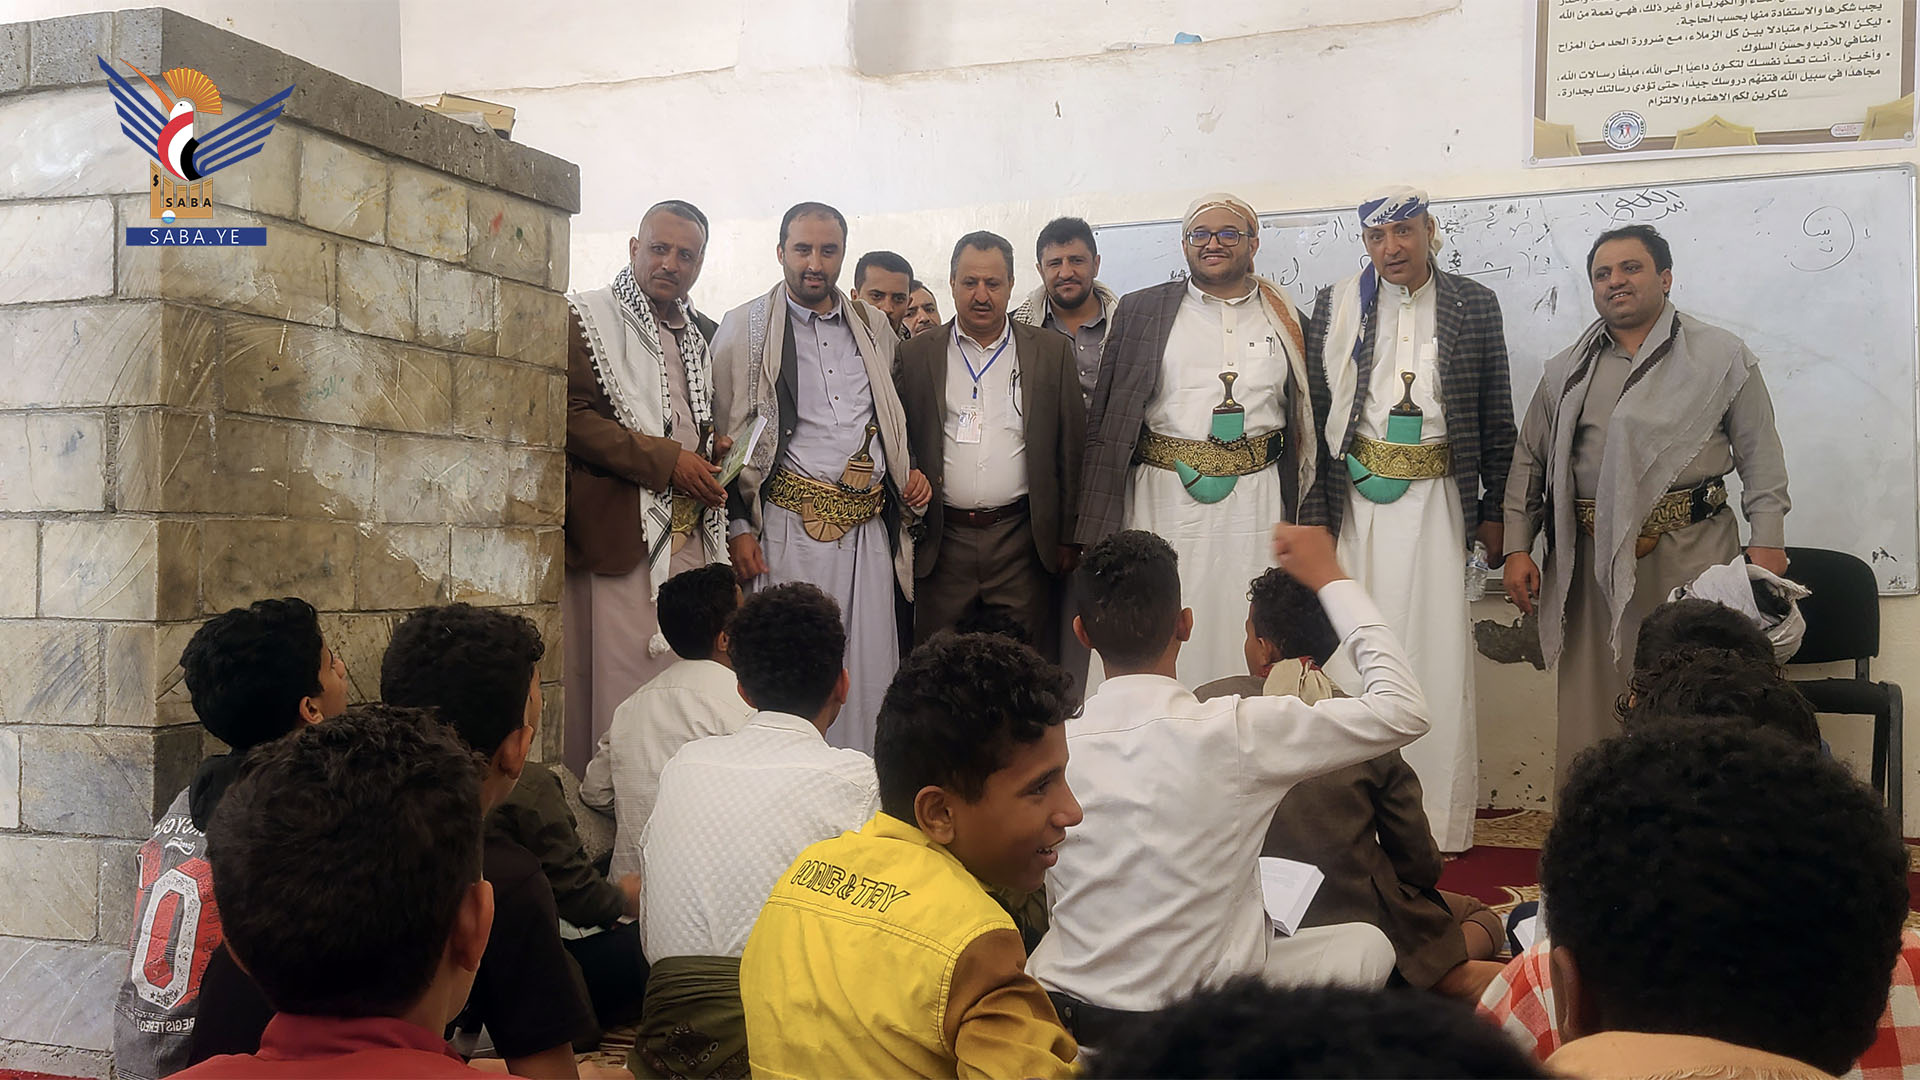 Summer activities at Al-Jand Mosque in Taiz